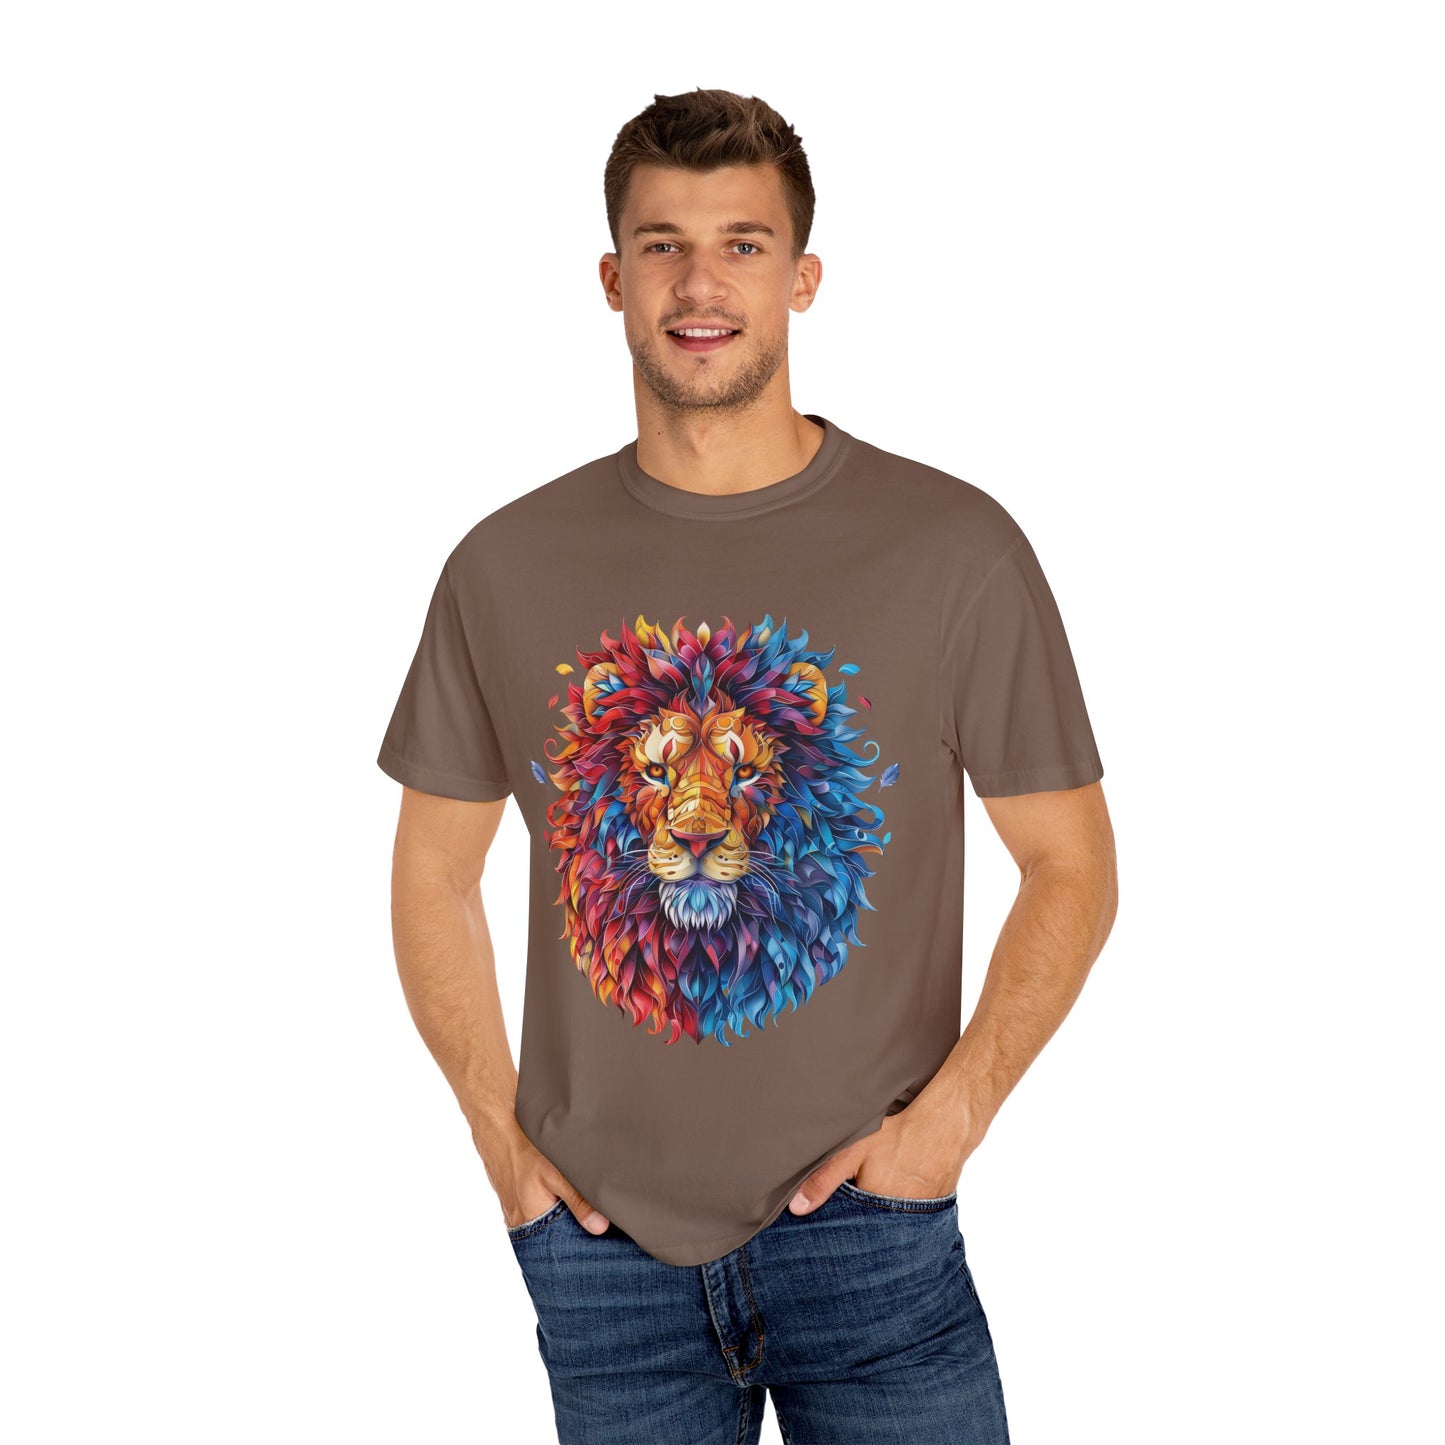 Lion Head Cool Graphic Design Novelty Unisex Garment-dyed T-shirt Cotton Funny Humorous Graphic Soft Premium Unisex Men Women Espresso T-shirt Birthday Gift-60